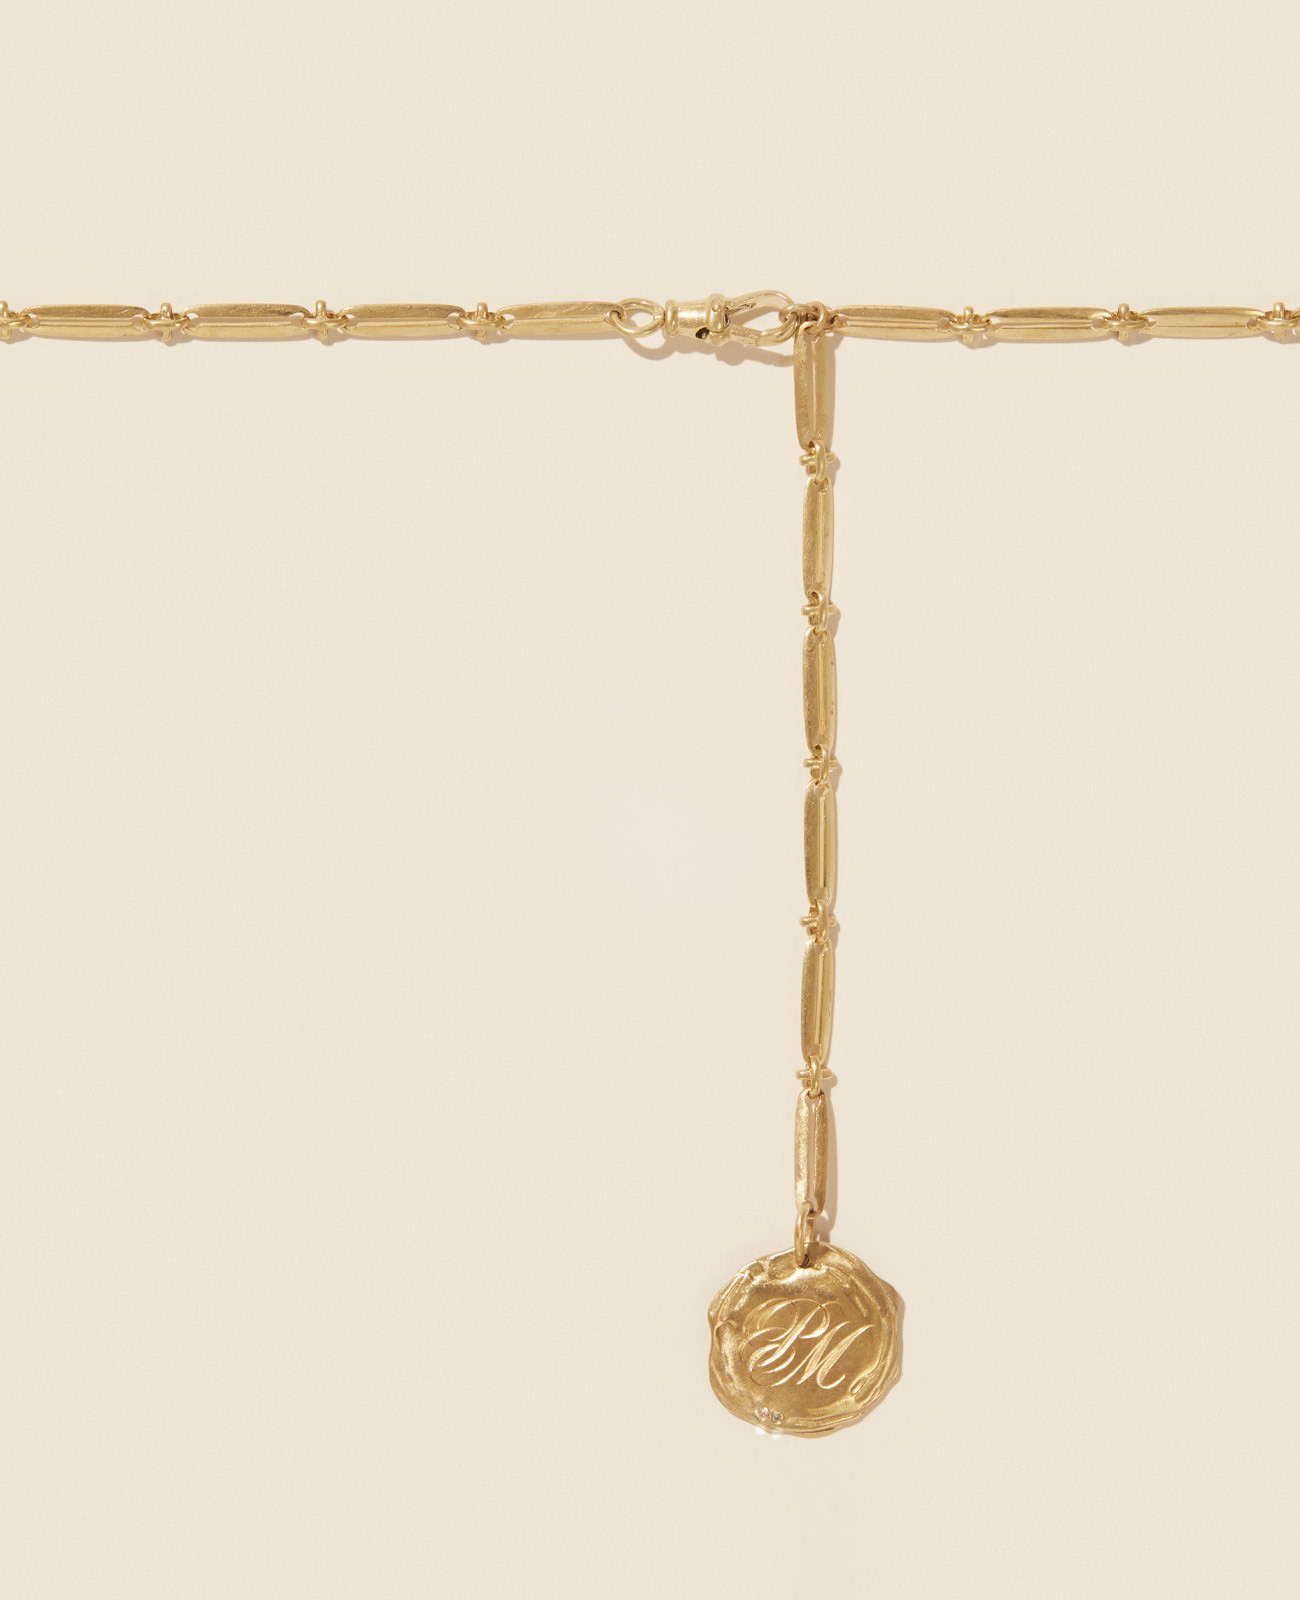 INITIALE N°2 necklace pascale monvoisin jewelry paris